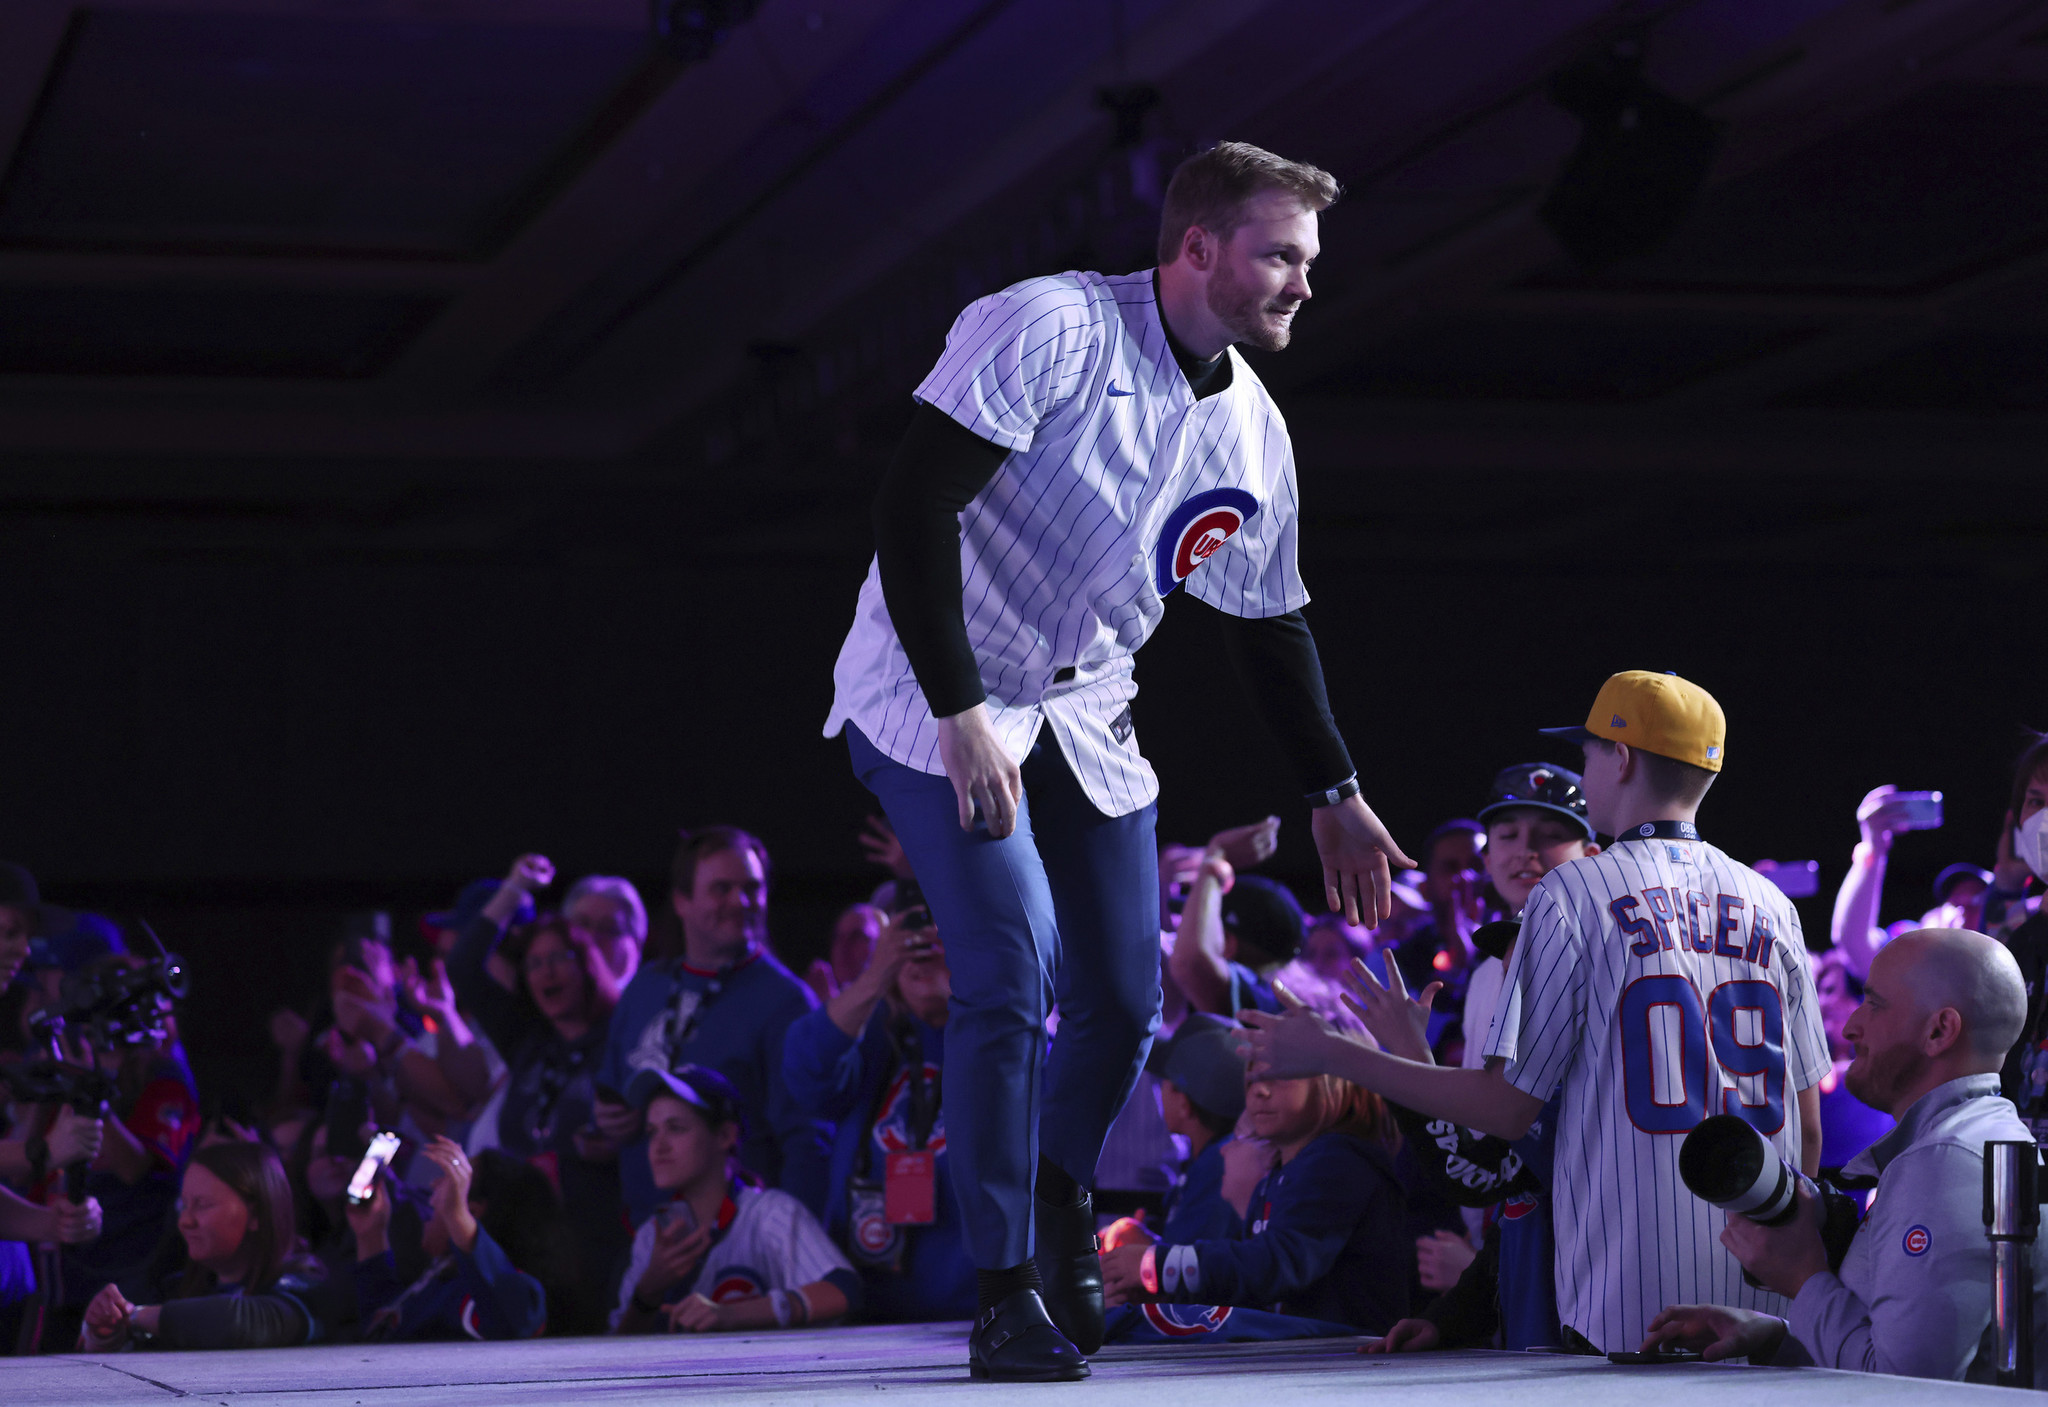 Cubs' Ian Happ 'super happy' Nico Hoerner got extension – NBC Sports Chicago